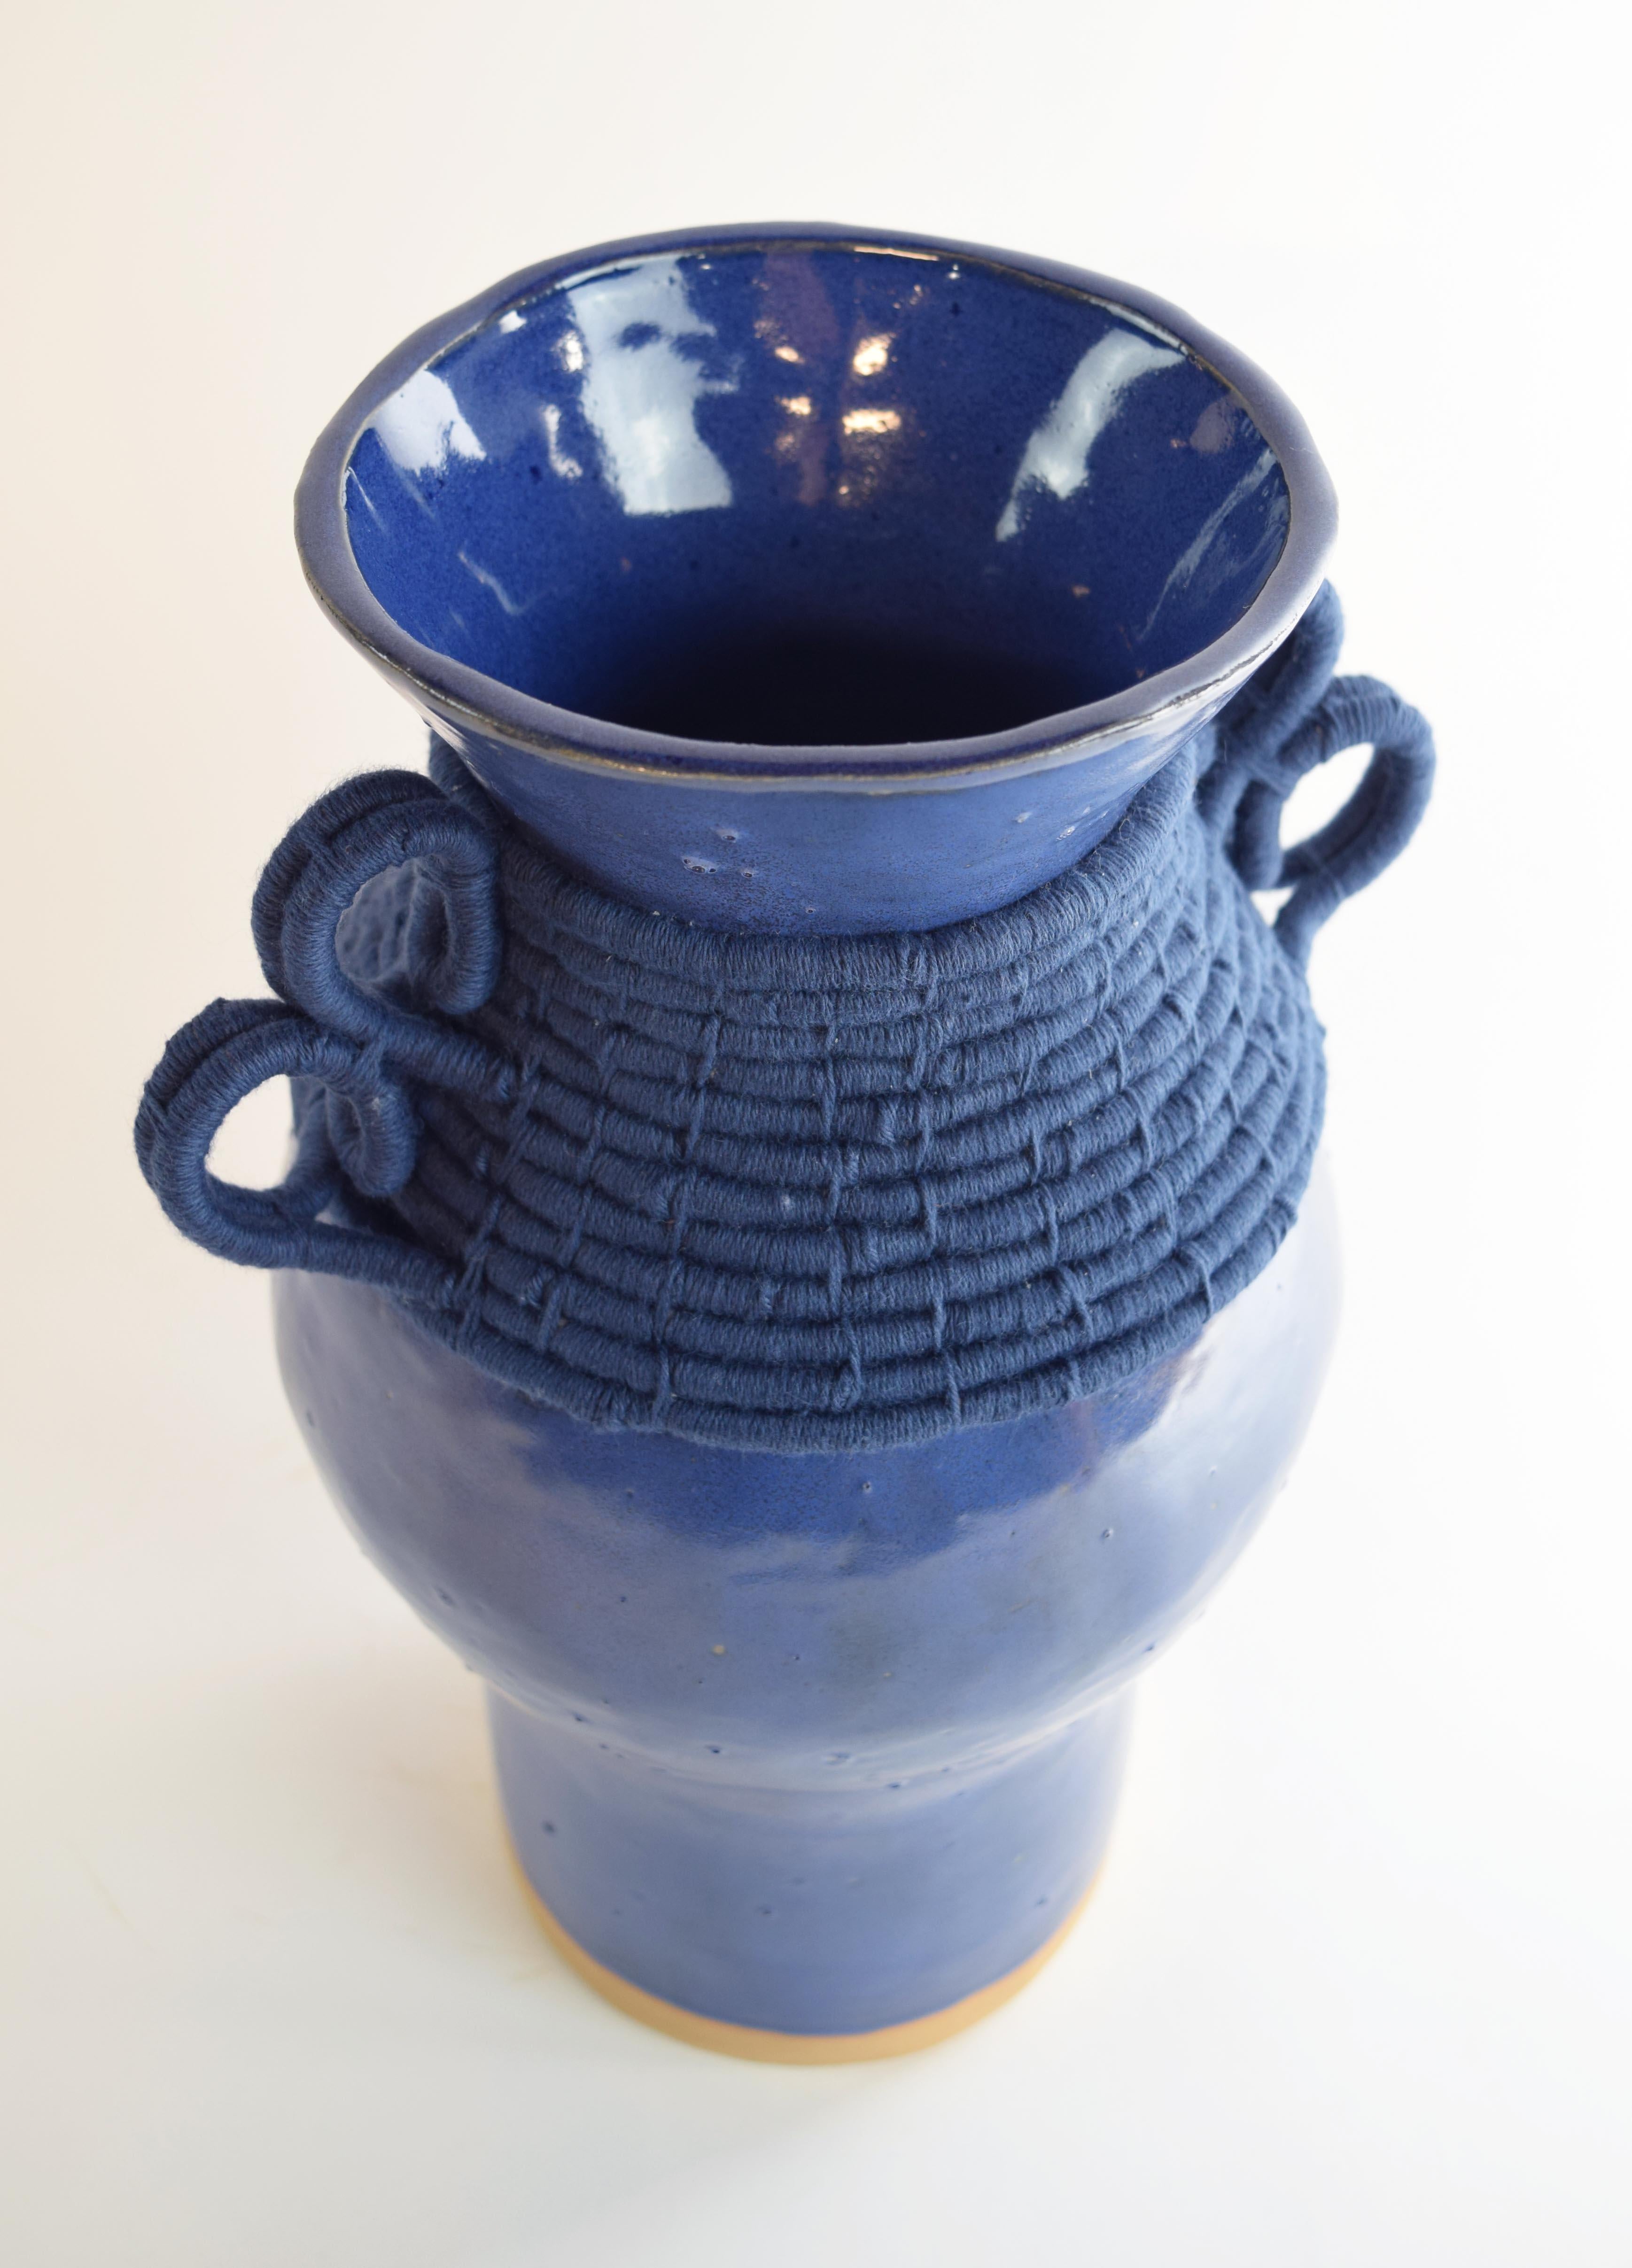 Organic Modern One of a Kind Handmade Ceramic Vase #780, Blue Glaze, Woven Navy Cotton Detail